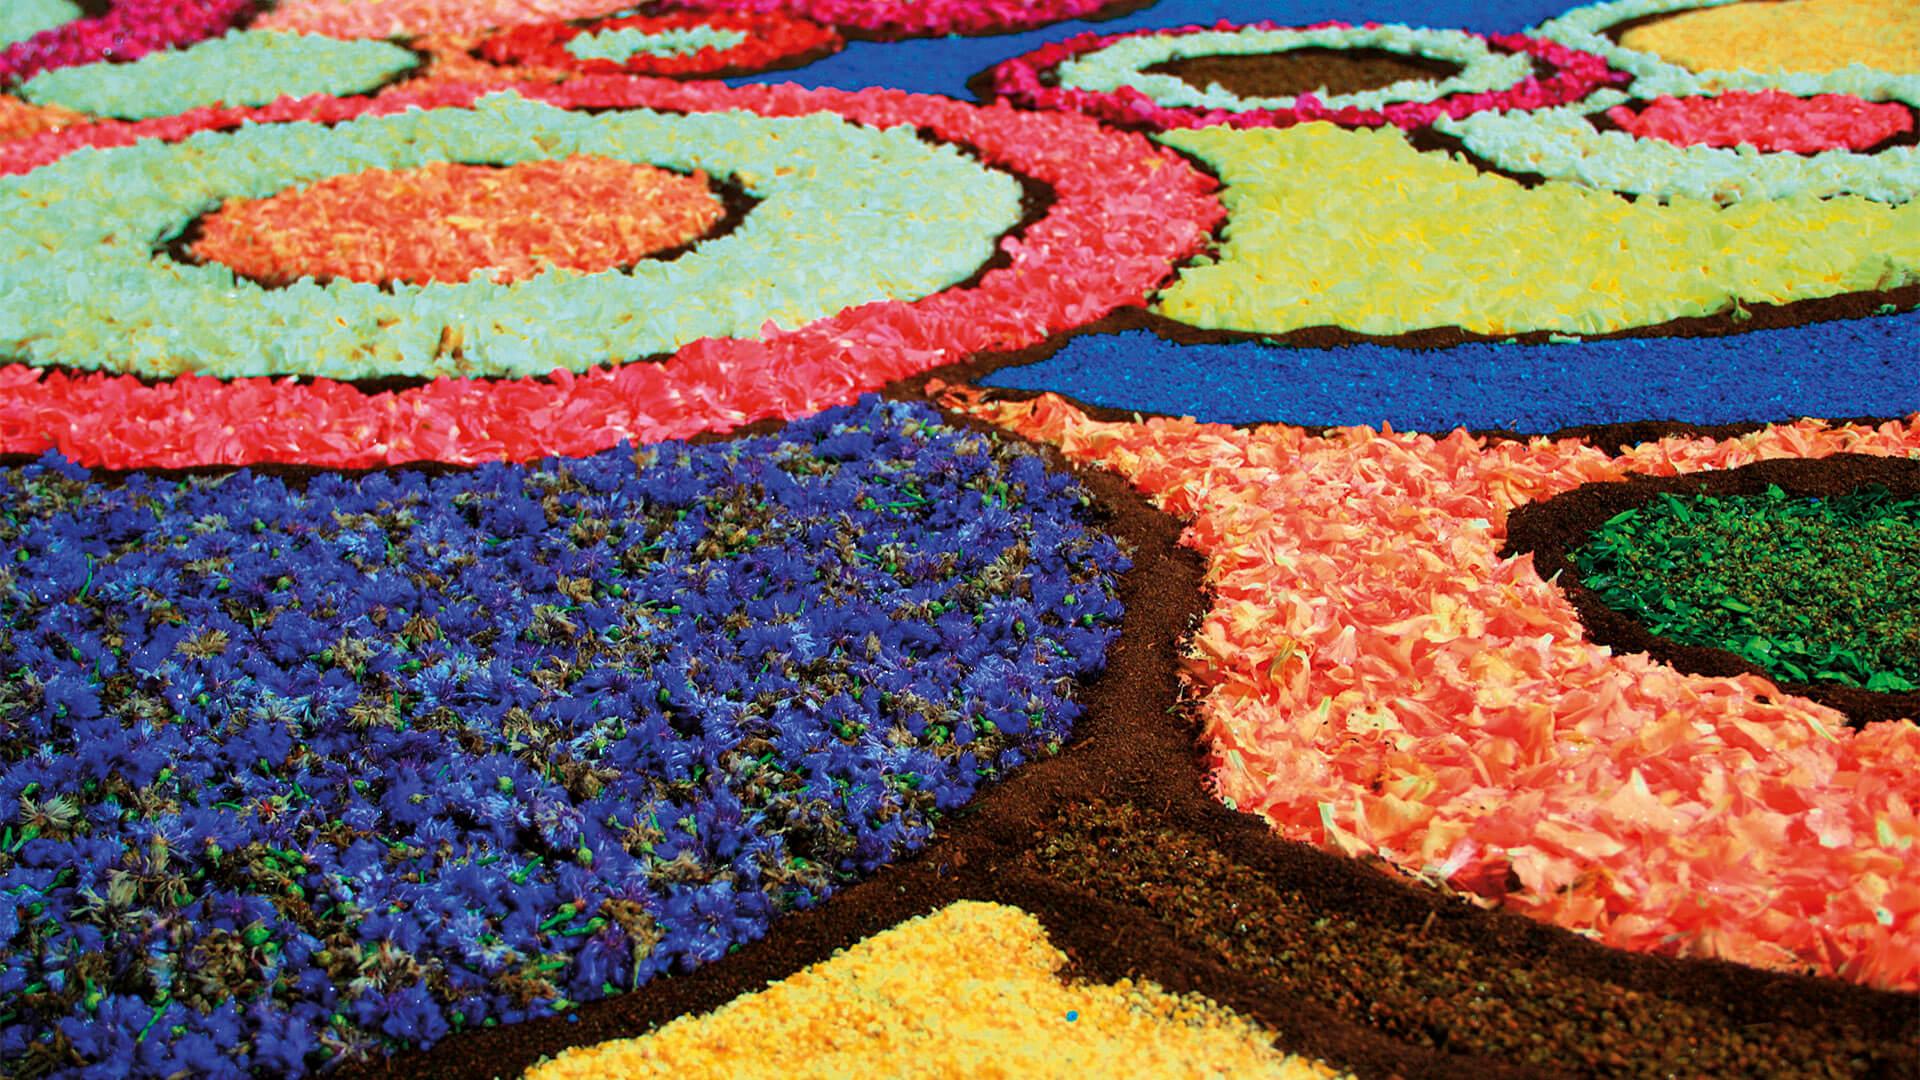 Infiorate: 3 best Flowers Carpets Festivals. Alitalia Discover Italy